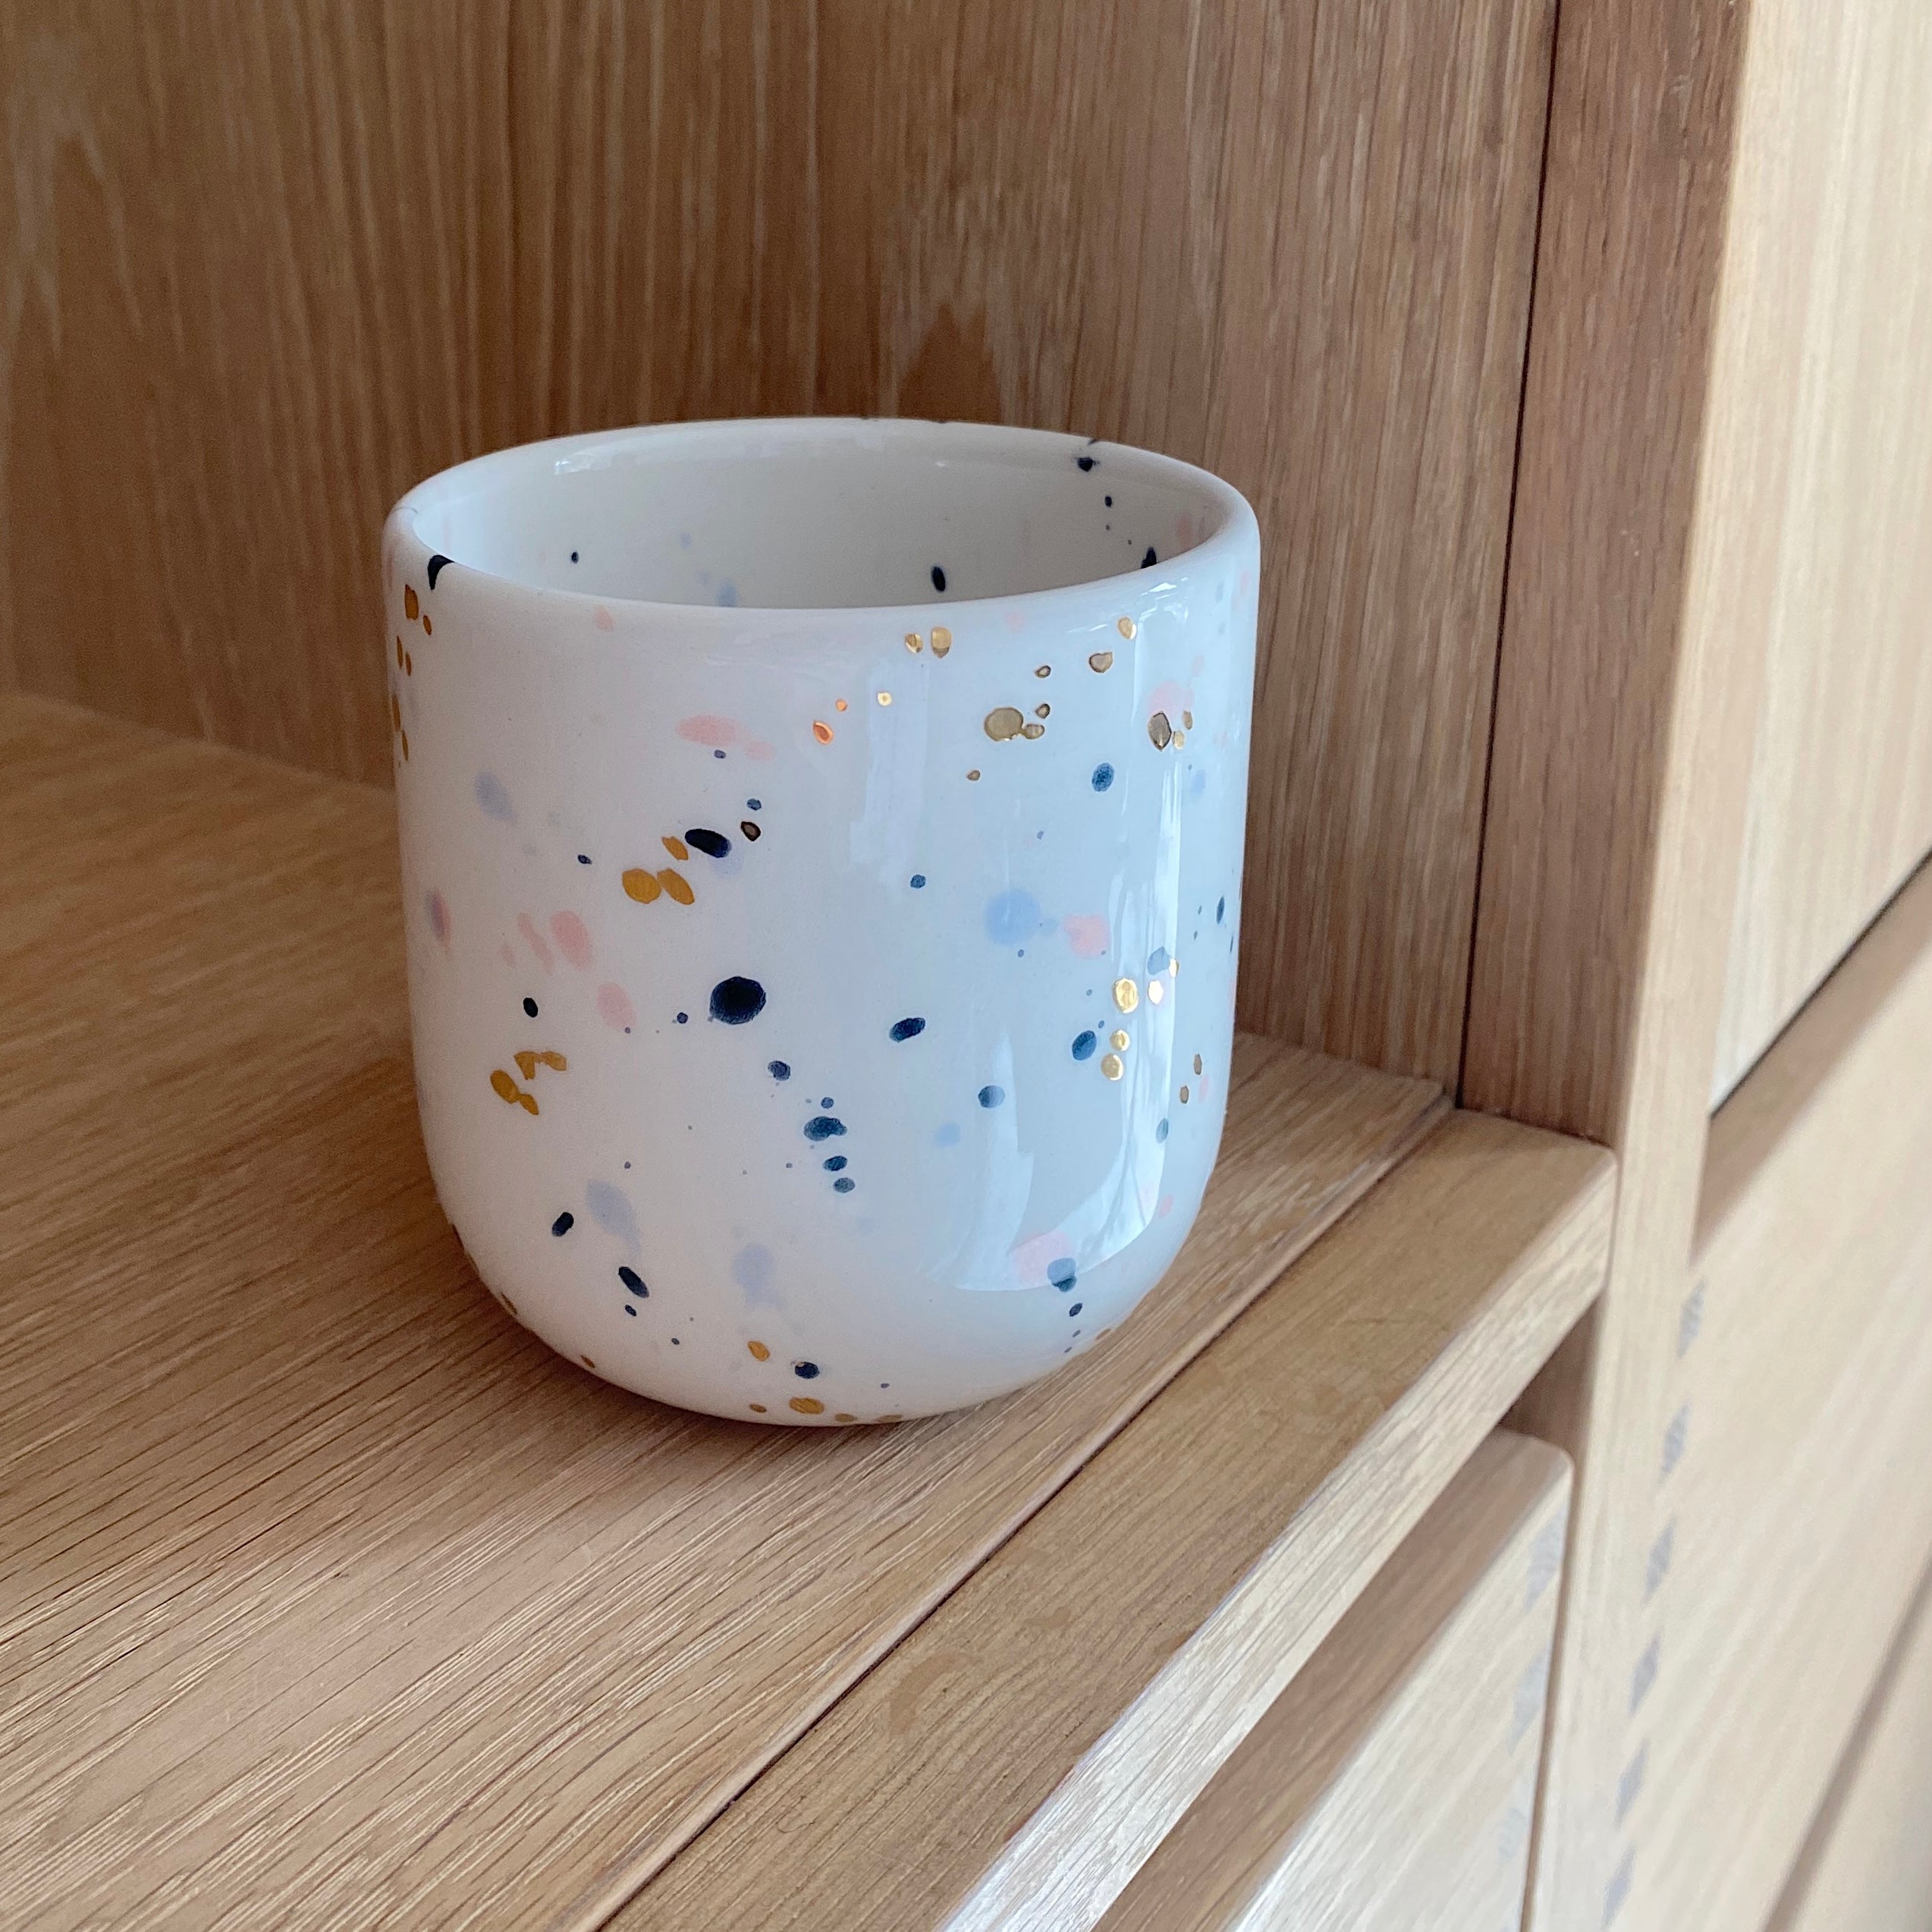 Marinski Heartmade latte cup speckles - dark blue, celestial blue, pink and gold